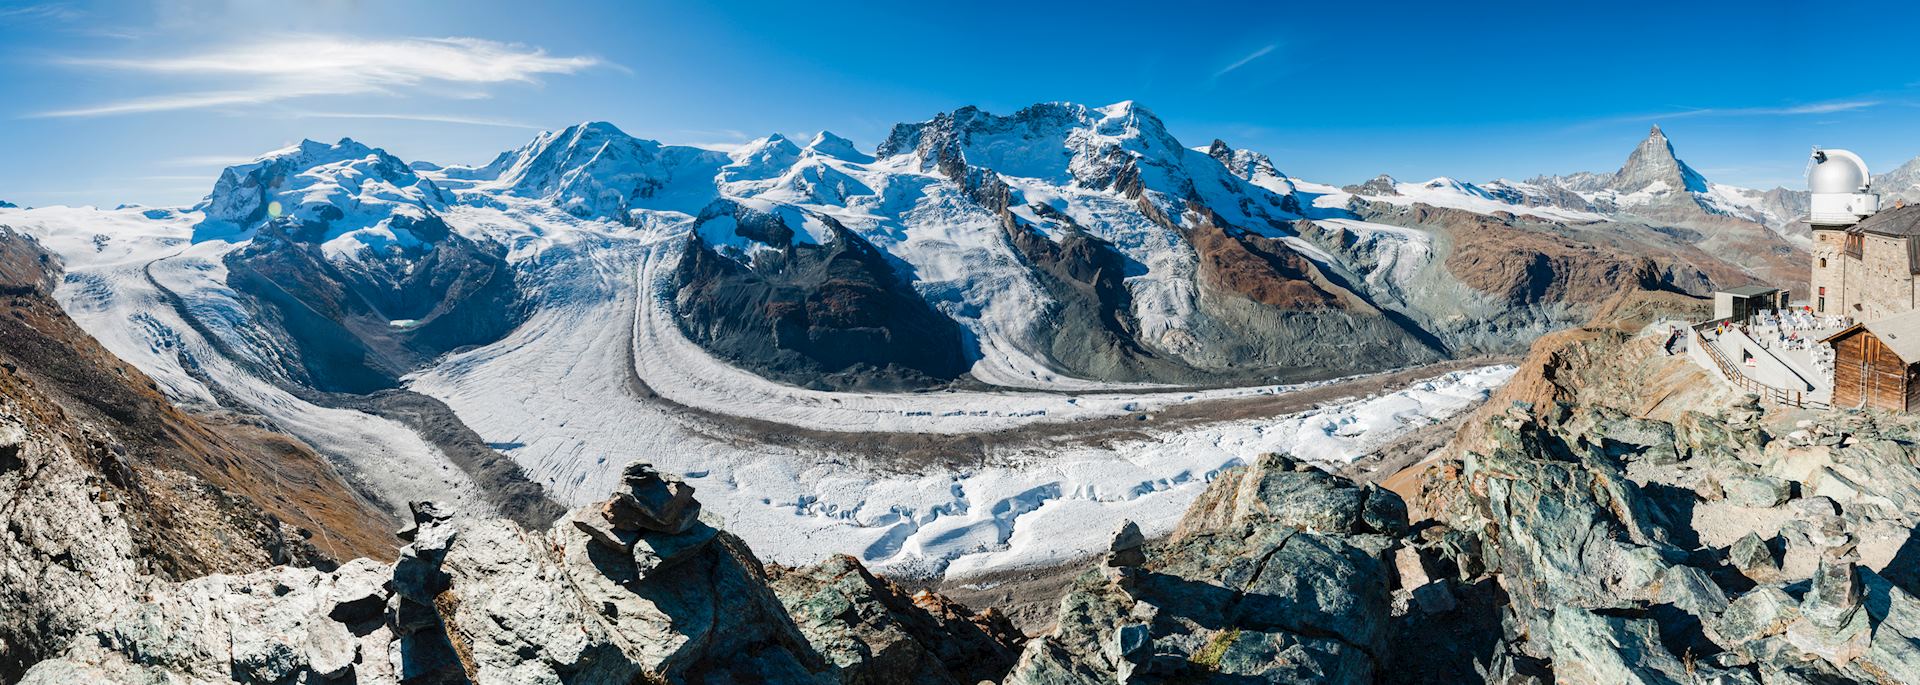 Gorner Glacier and Matterhorn